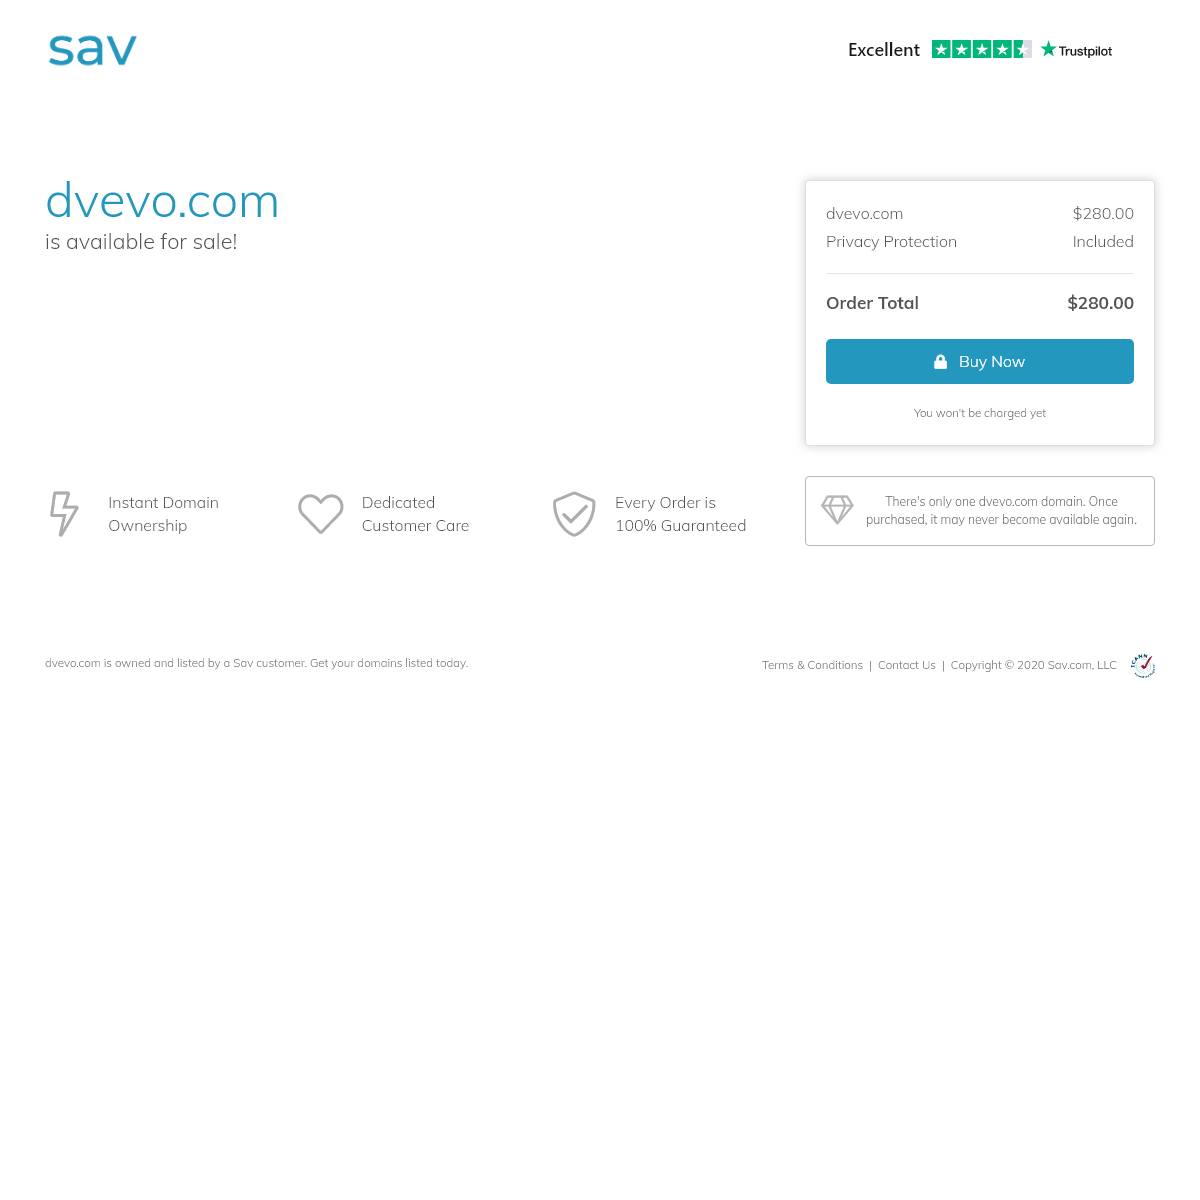 A complete backup of dvevo.com